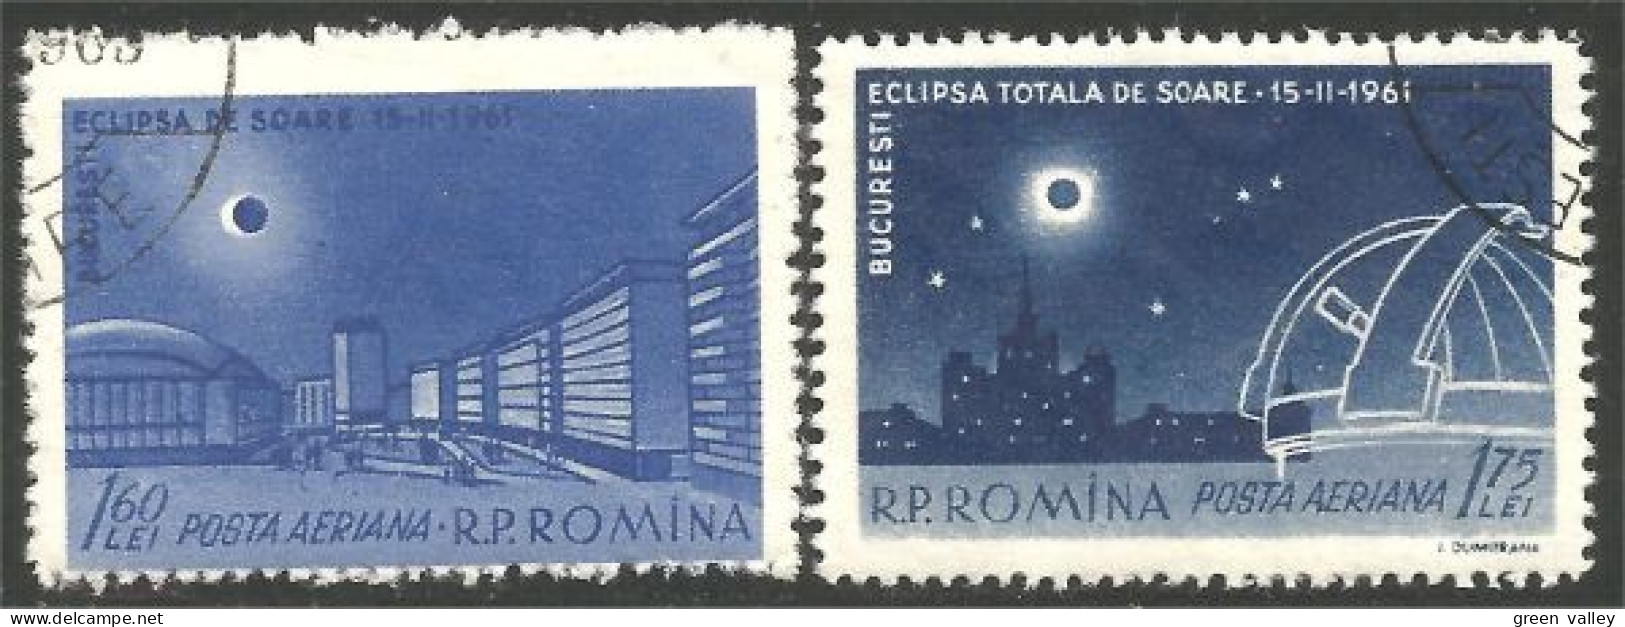 766 Roumanie Eclipse Telescope (ROU-208) - Astronomie